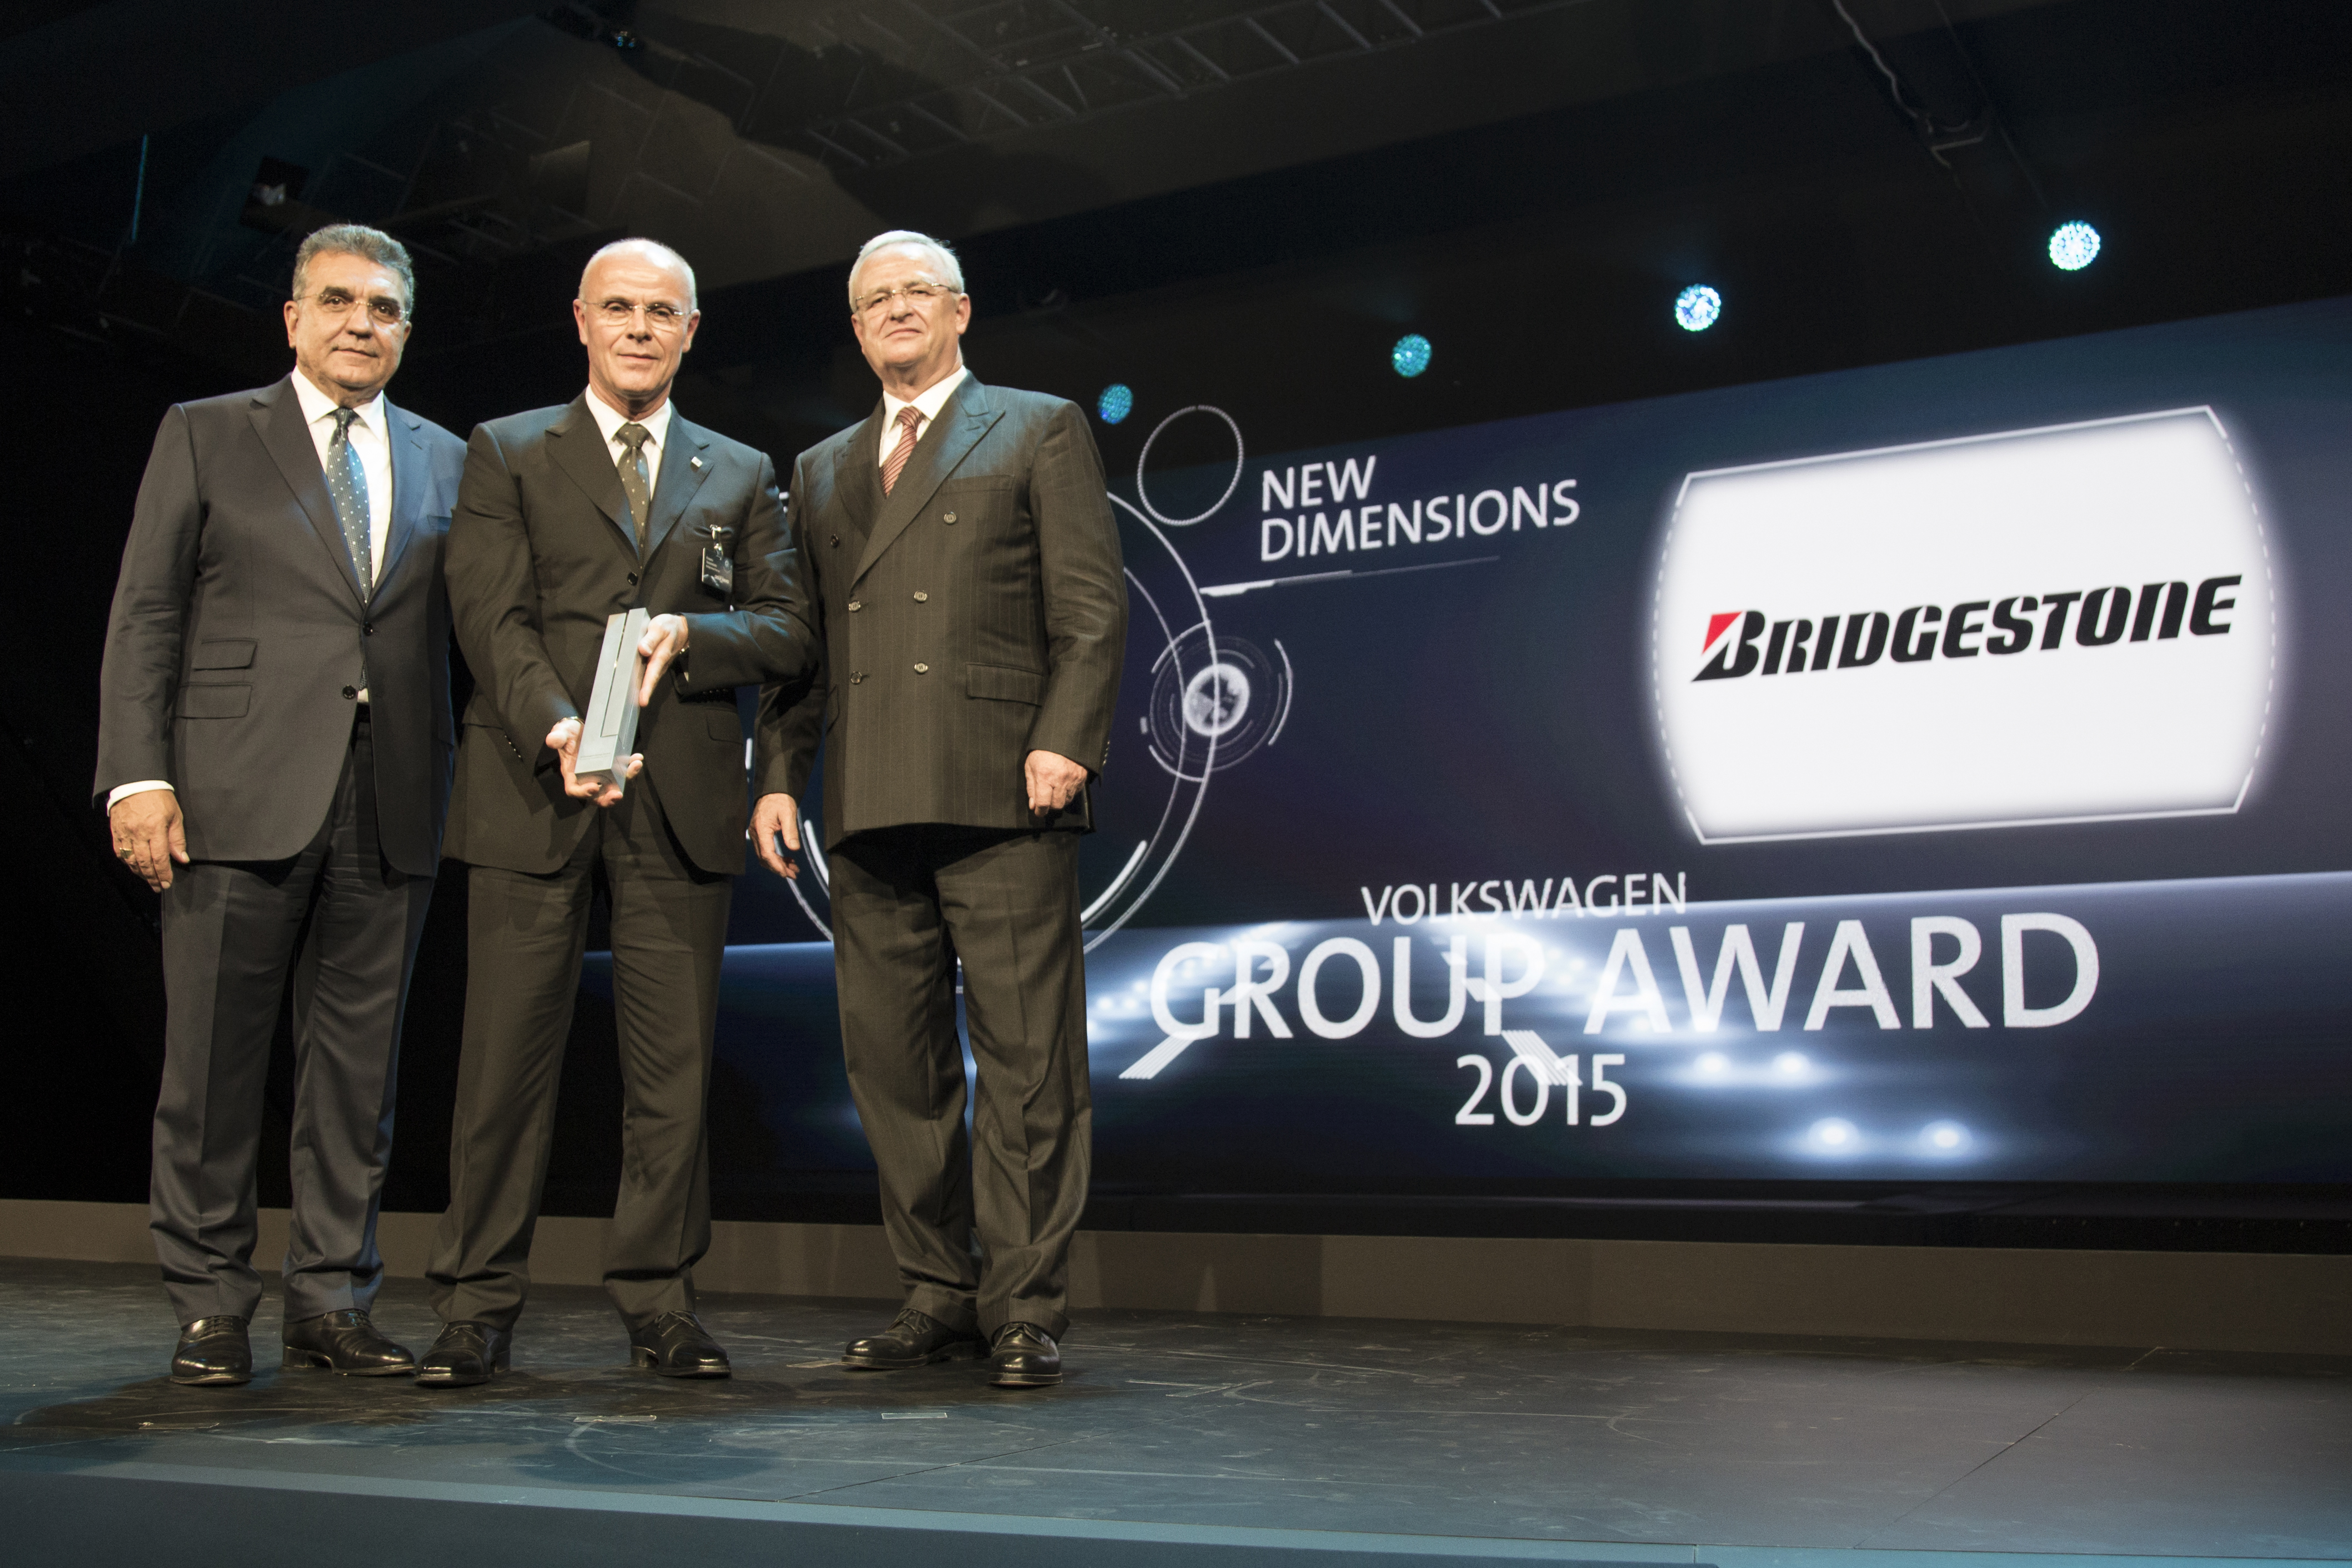 Bridgestone a VW Group Award recipient